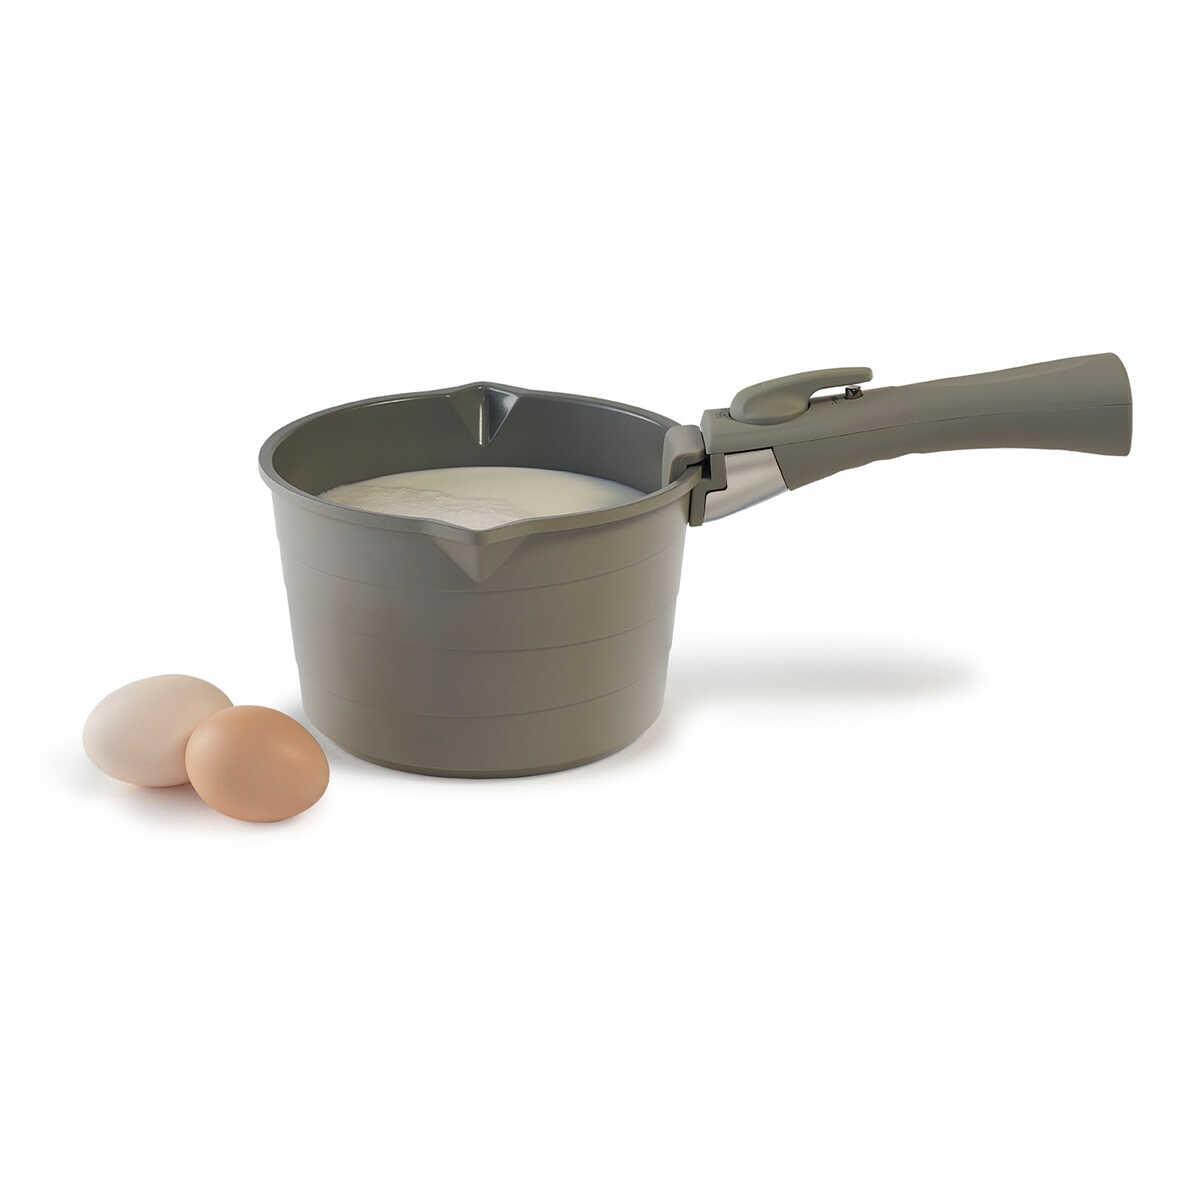 Pot and Pan Set with Detachable Handle